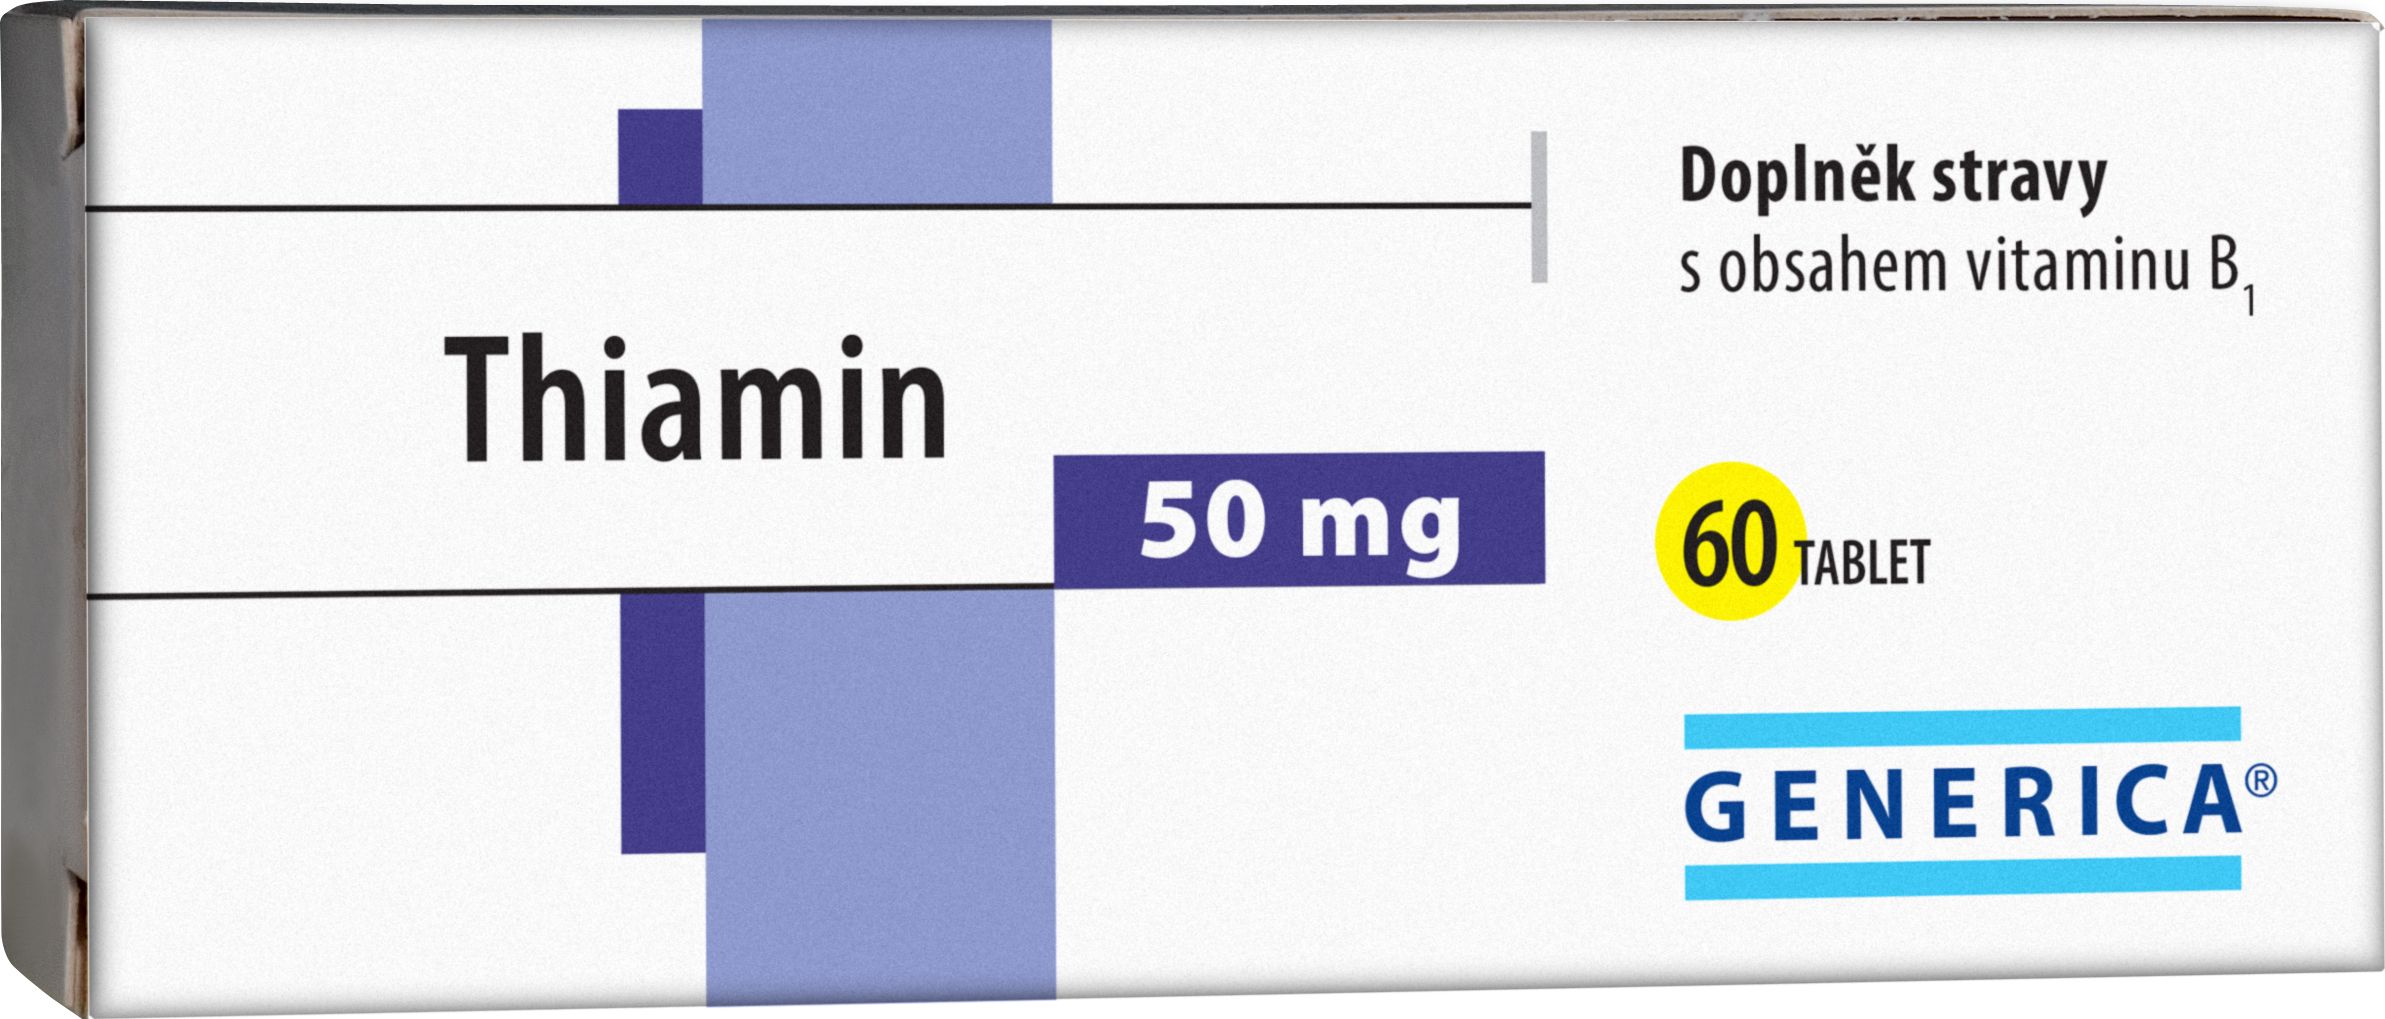 Generica Thiamin 50 mg 60 tablet Generica